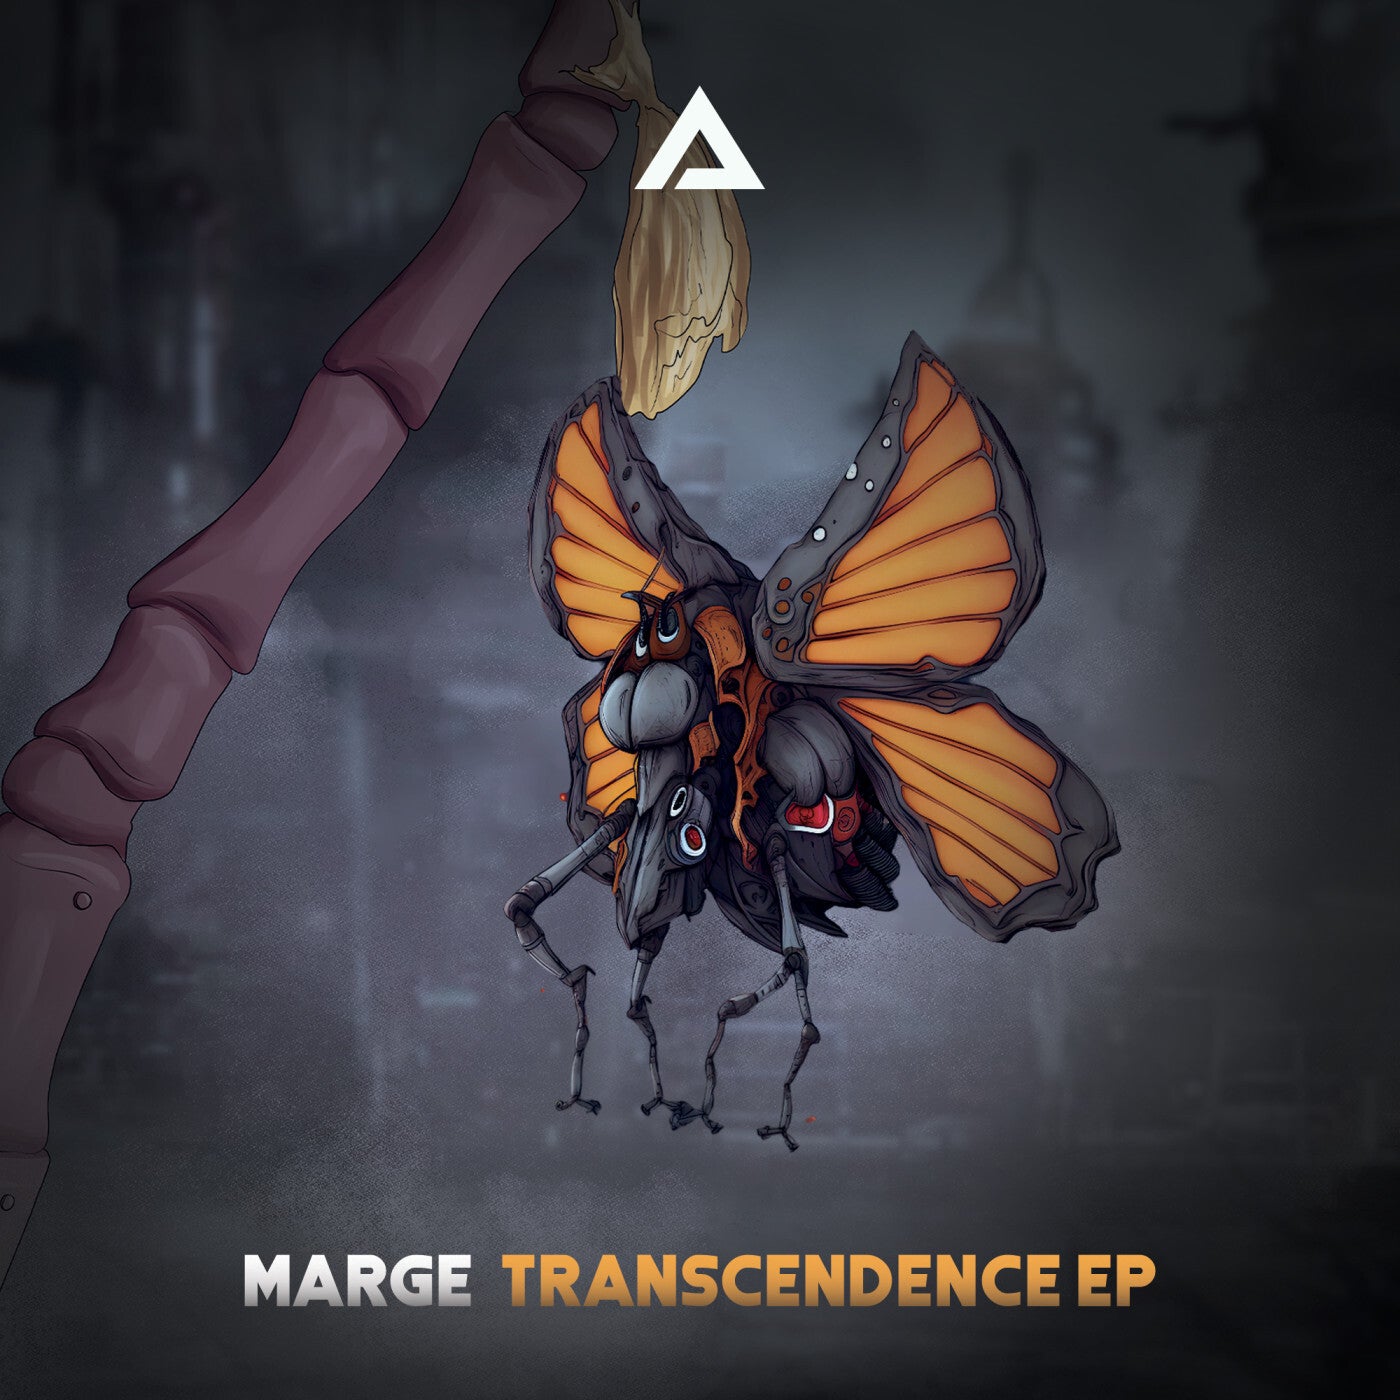 Transendence EP